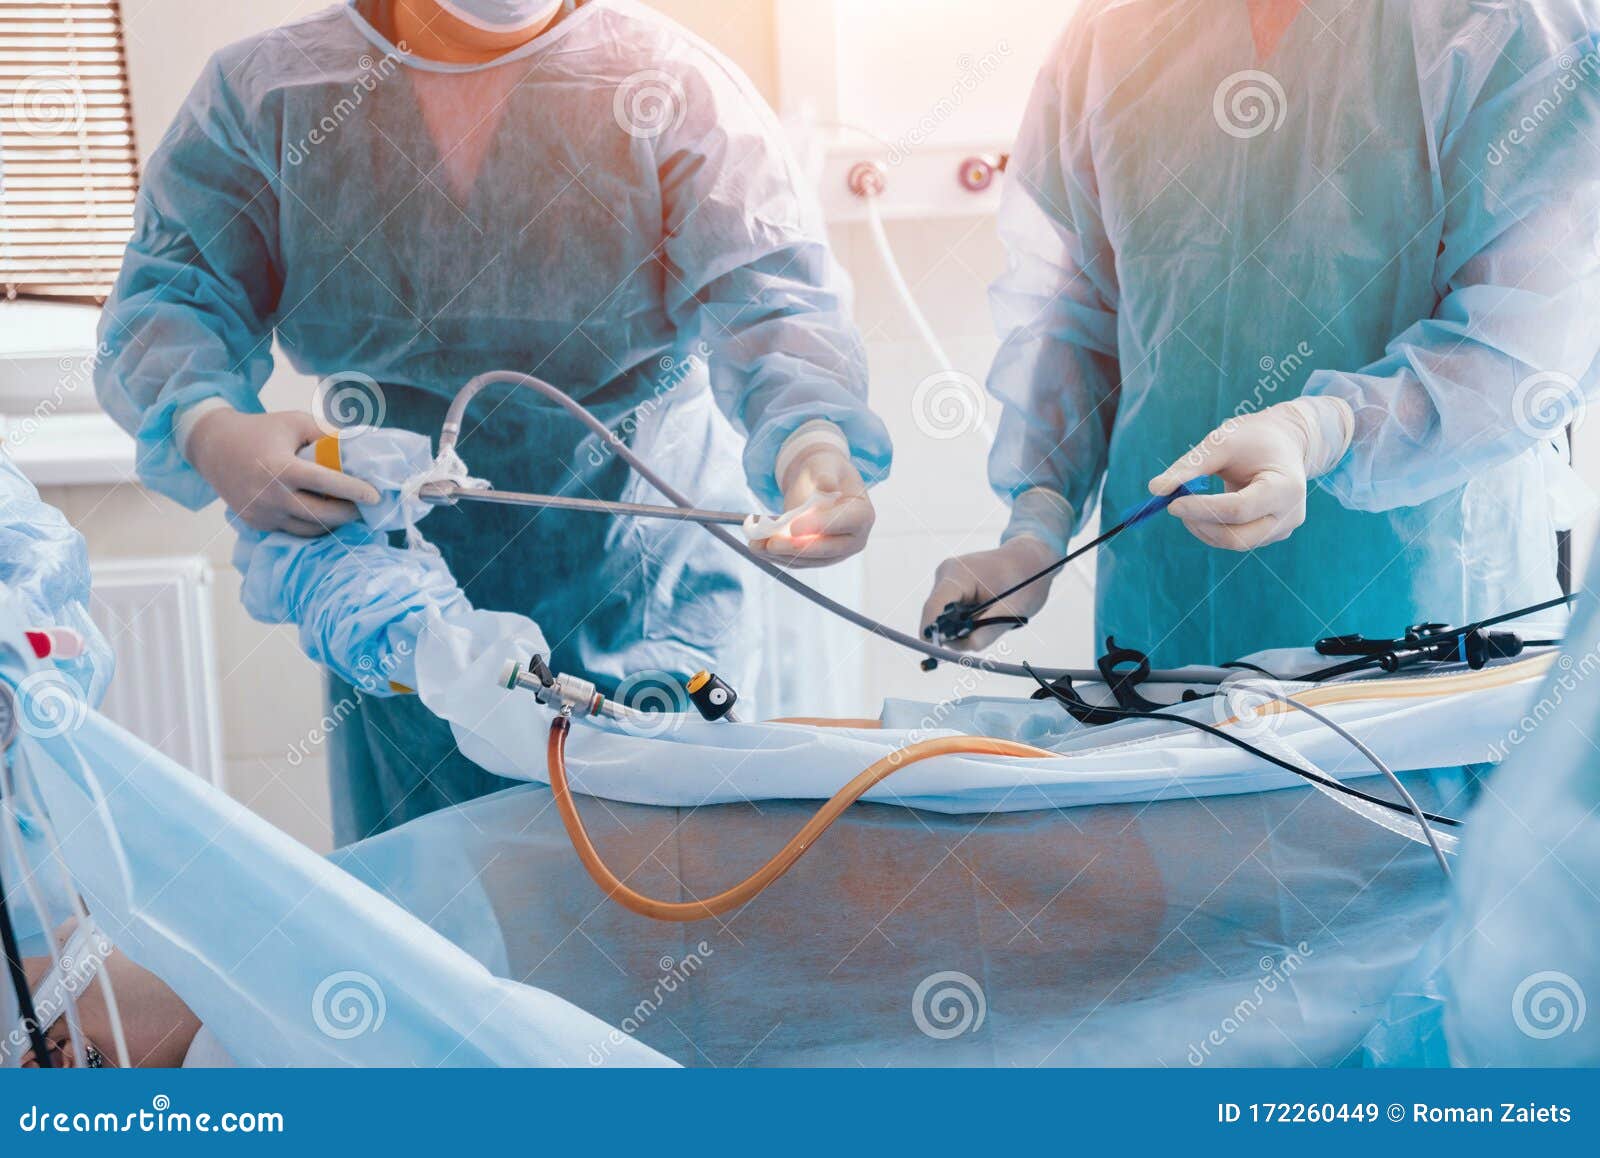 Process Of Gynecological Surgery Operation Using Laparoscopic Equipment ...